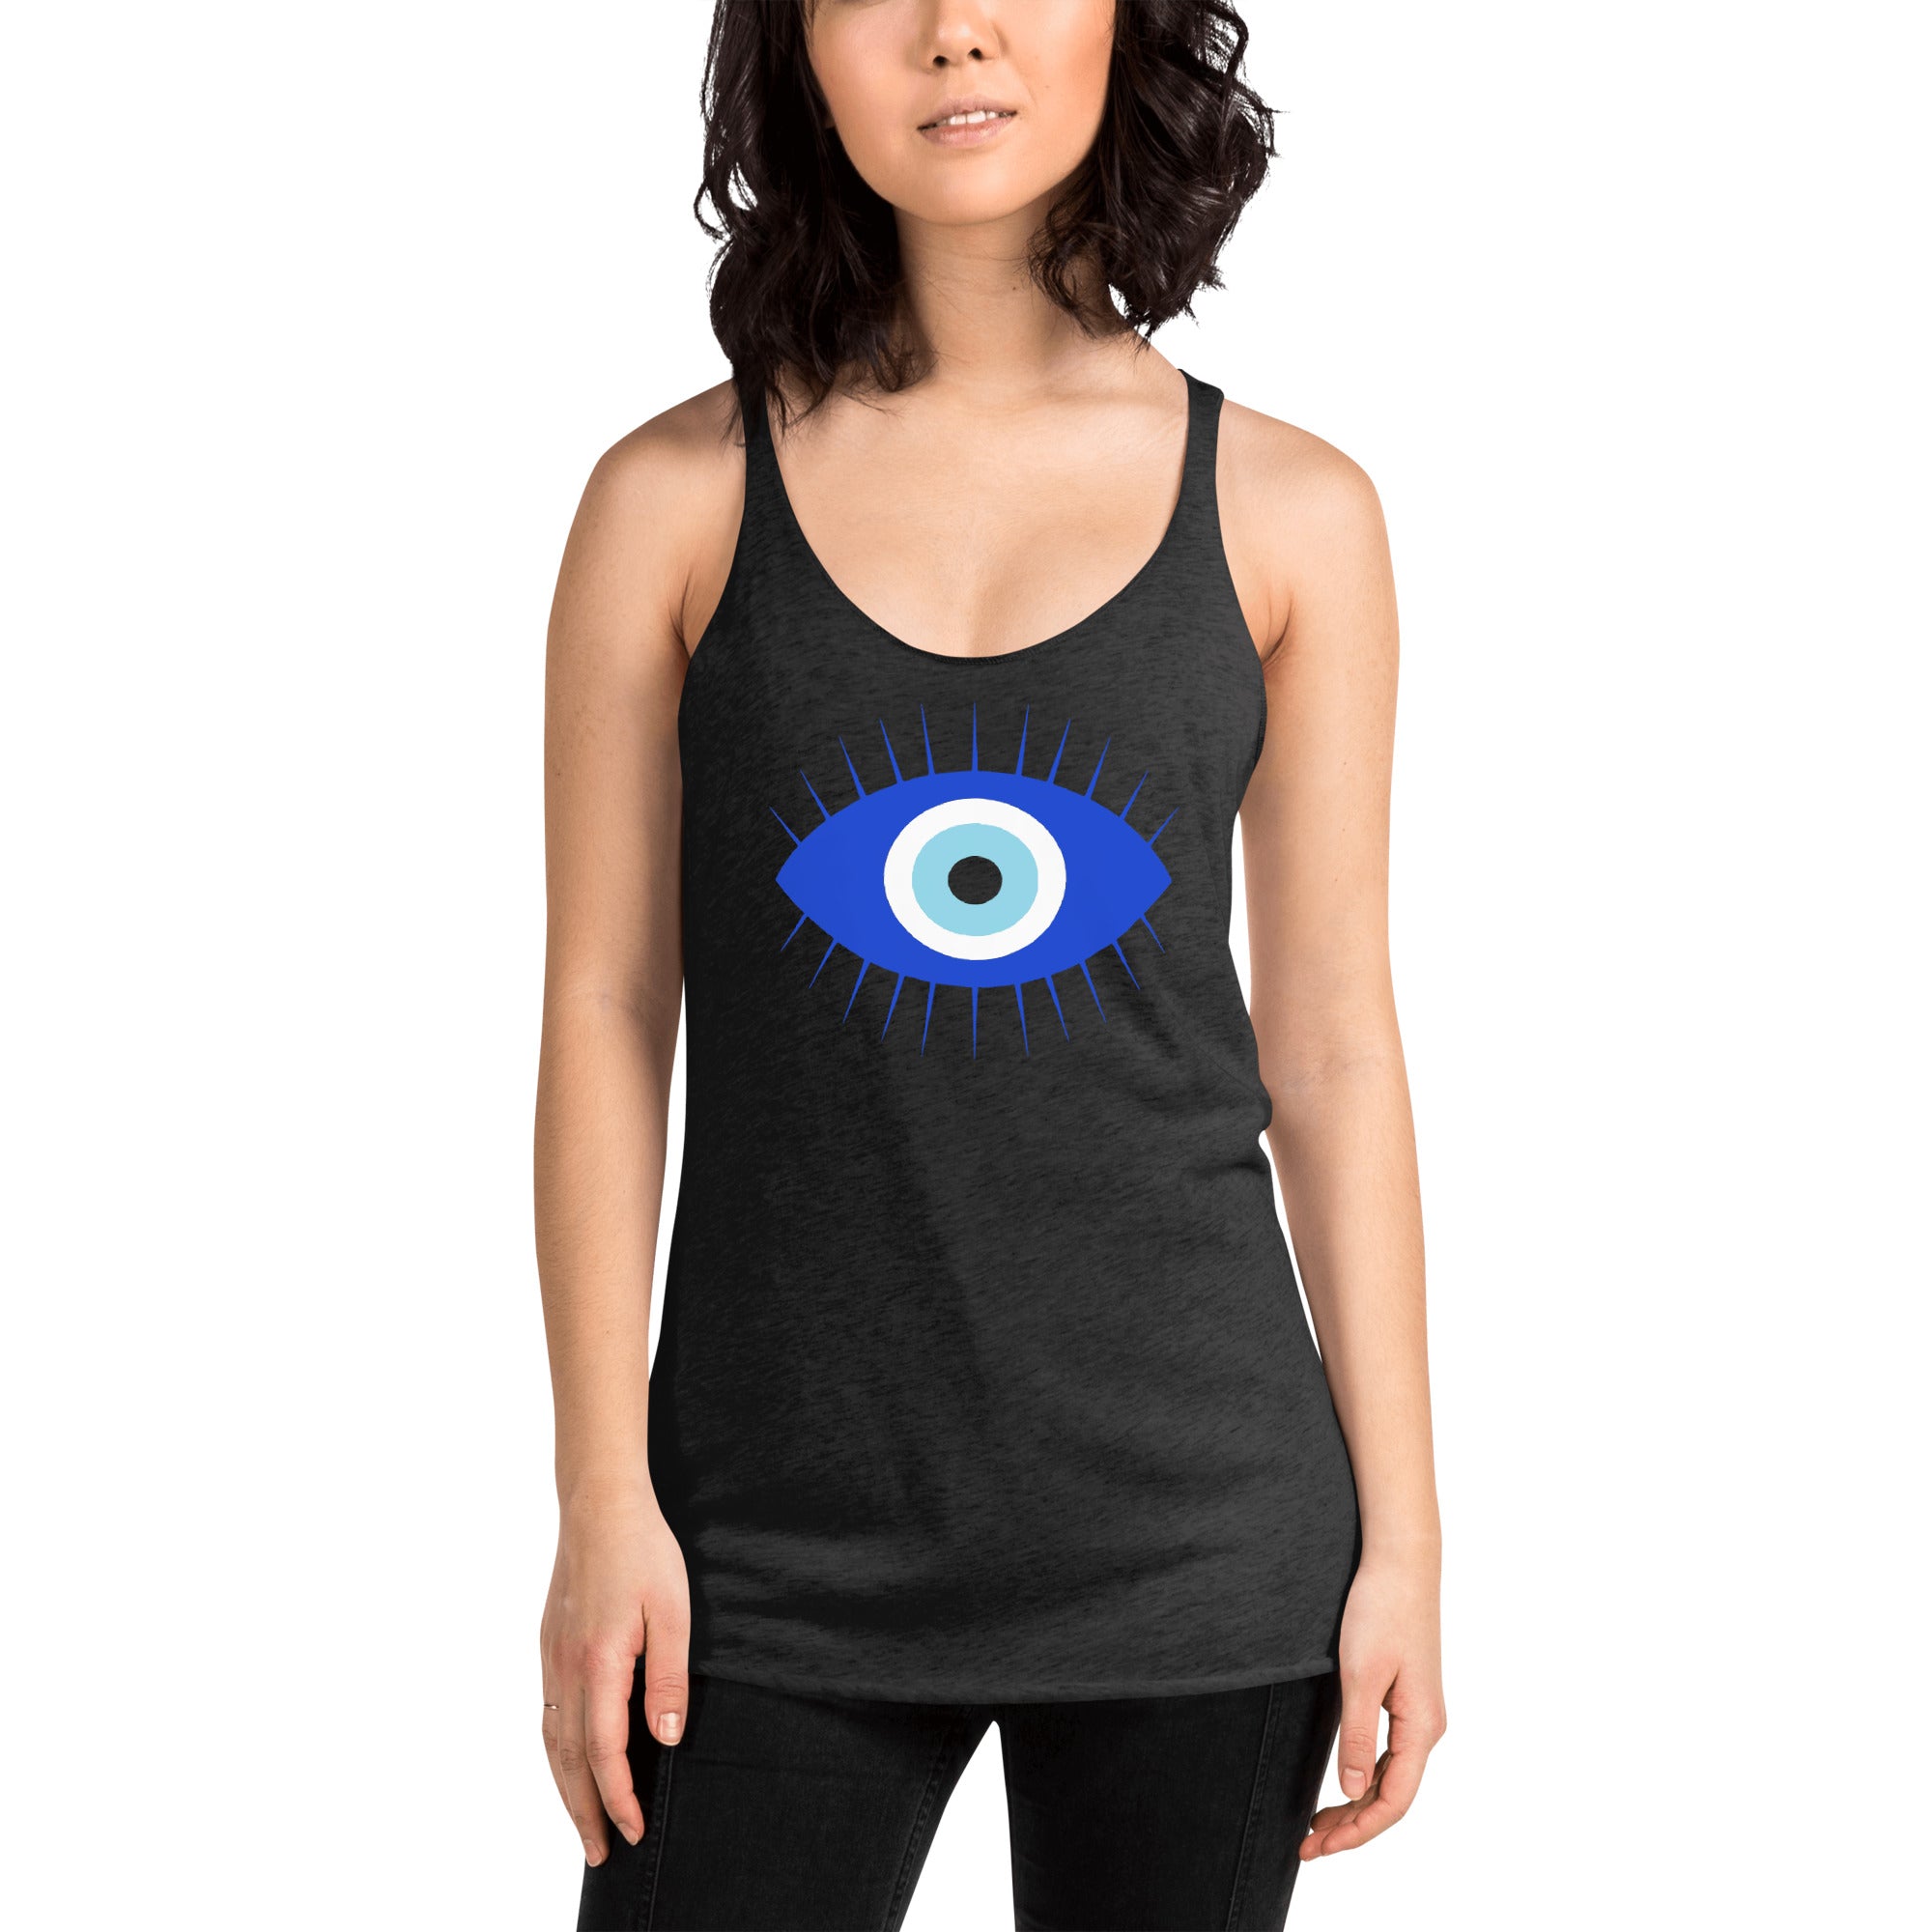 Curse of the Evil Eye Spell of Misfortune Women's Racerback Tank Top Shirt